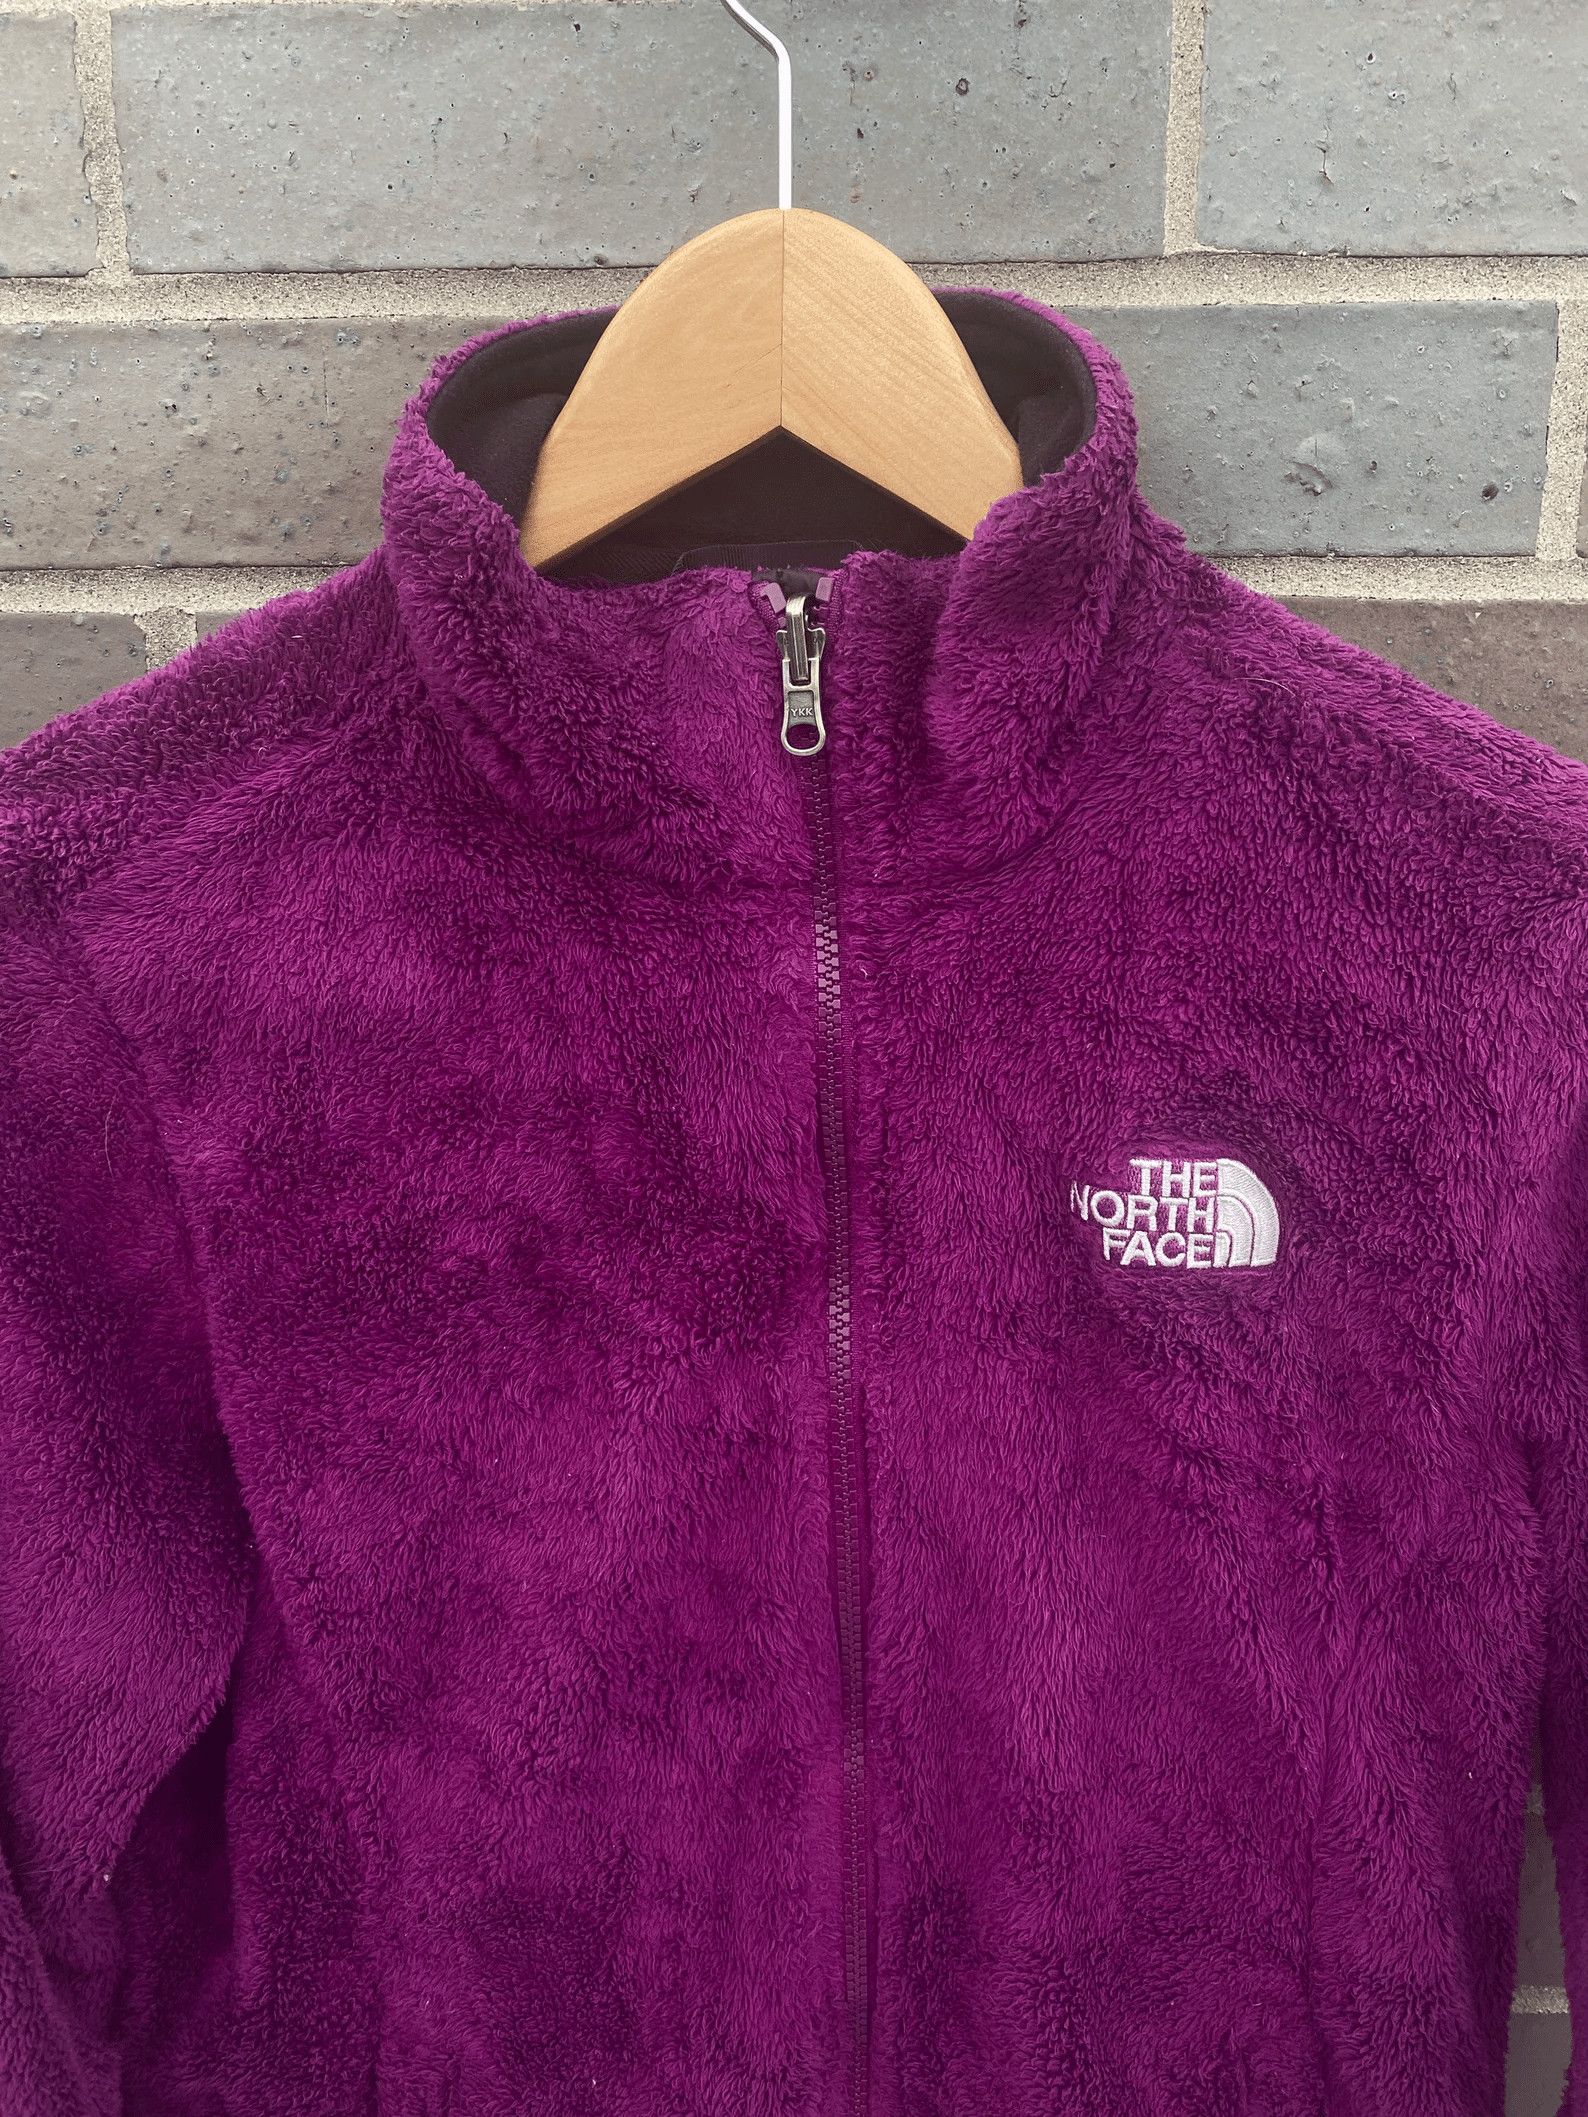 The North Face Vintage 1990s The North Face Pile Fleece Sweatshirt Size S / US 4 / IT 40 - 4 Thumbnail